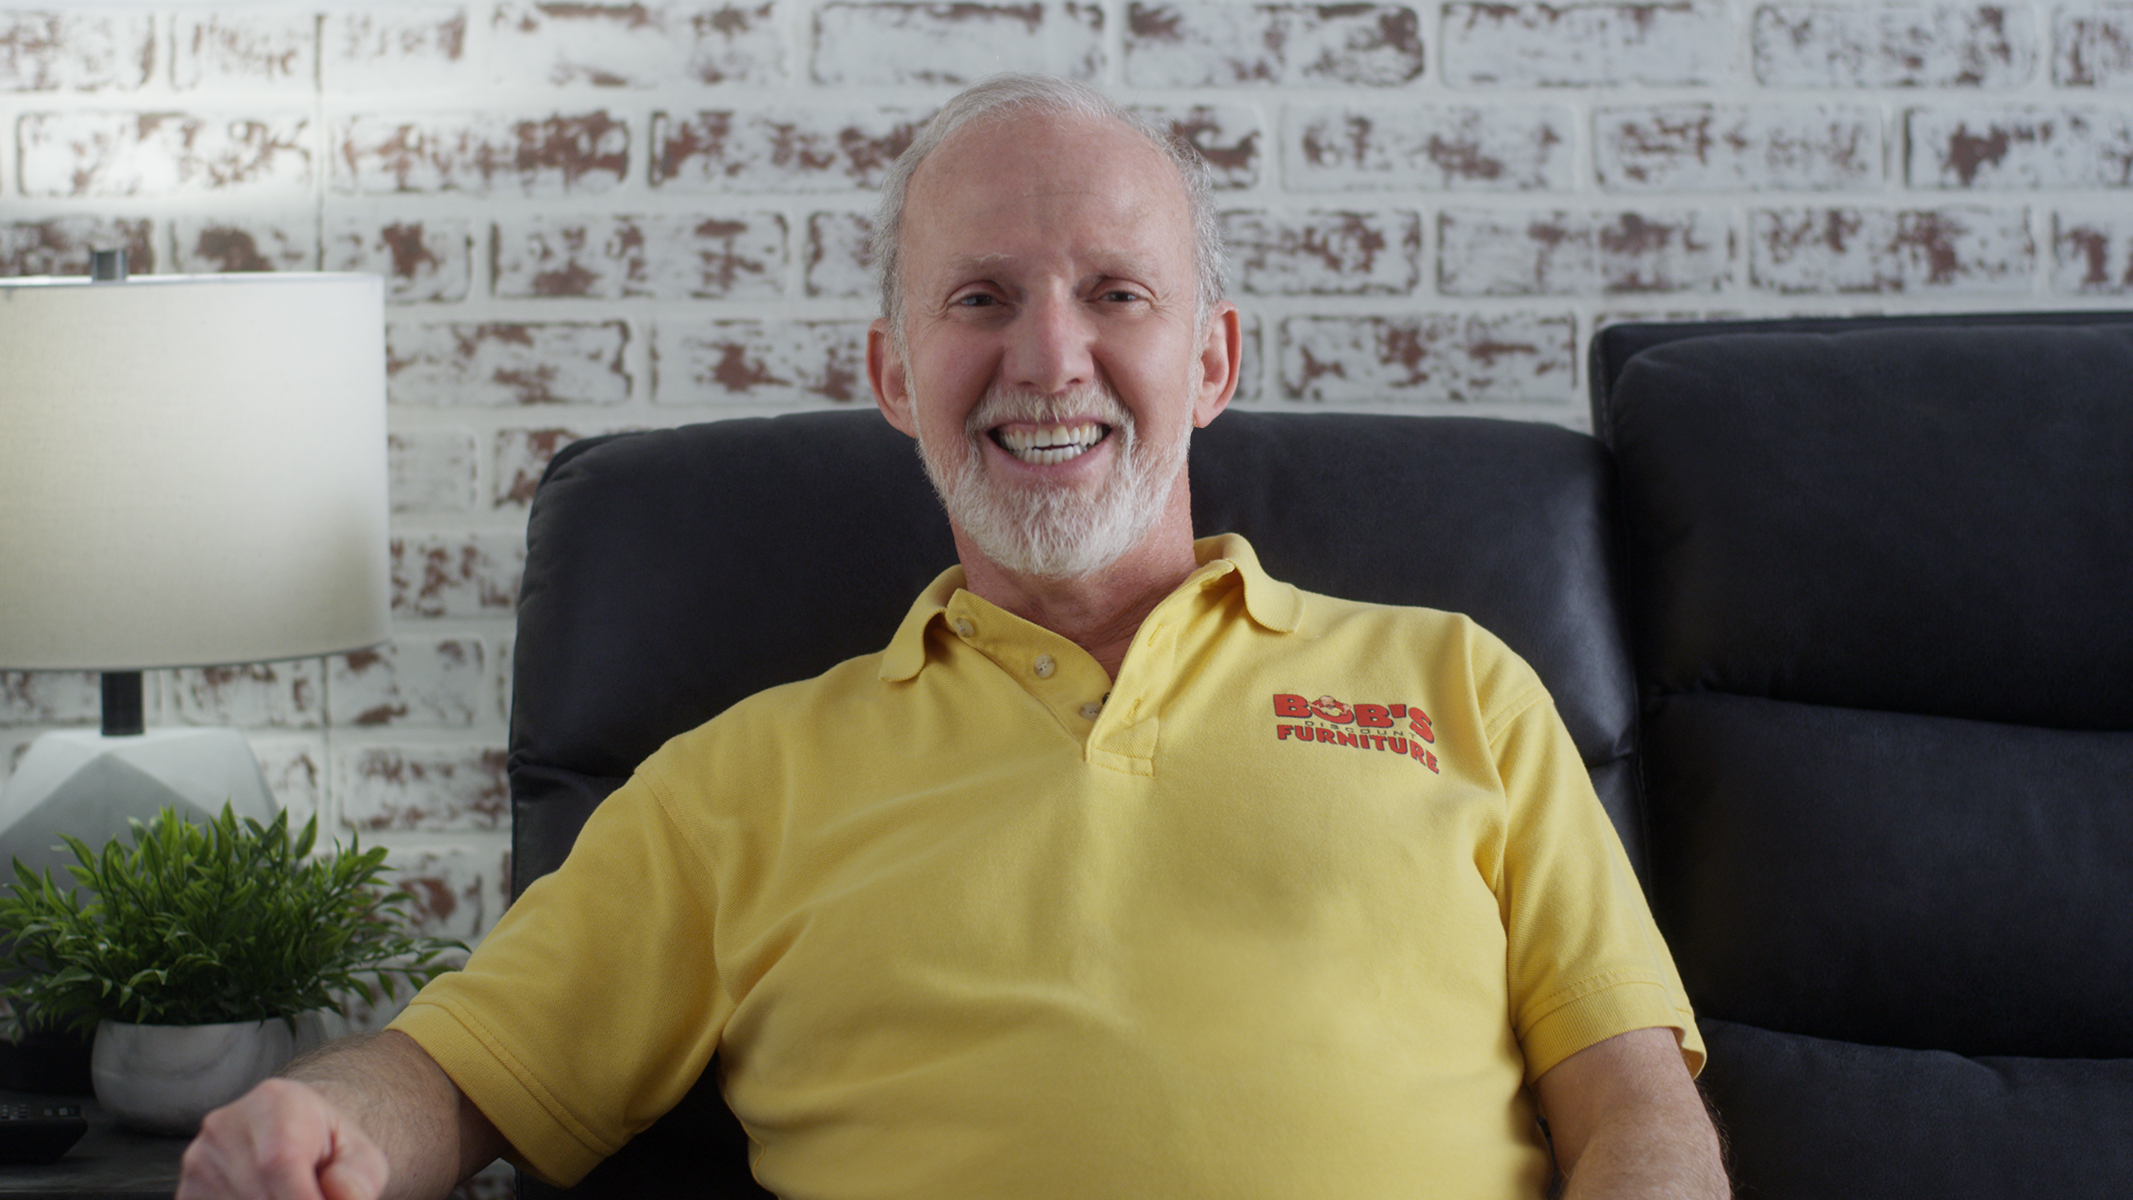 Bob Kaufman, the founder of Bob's Discount Furniture, sits on a sofa.